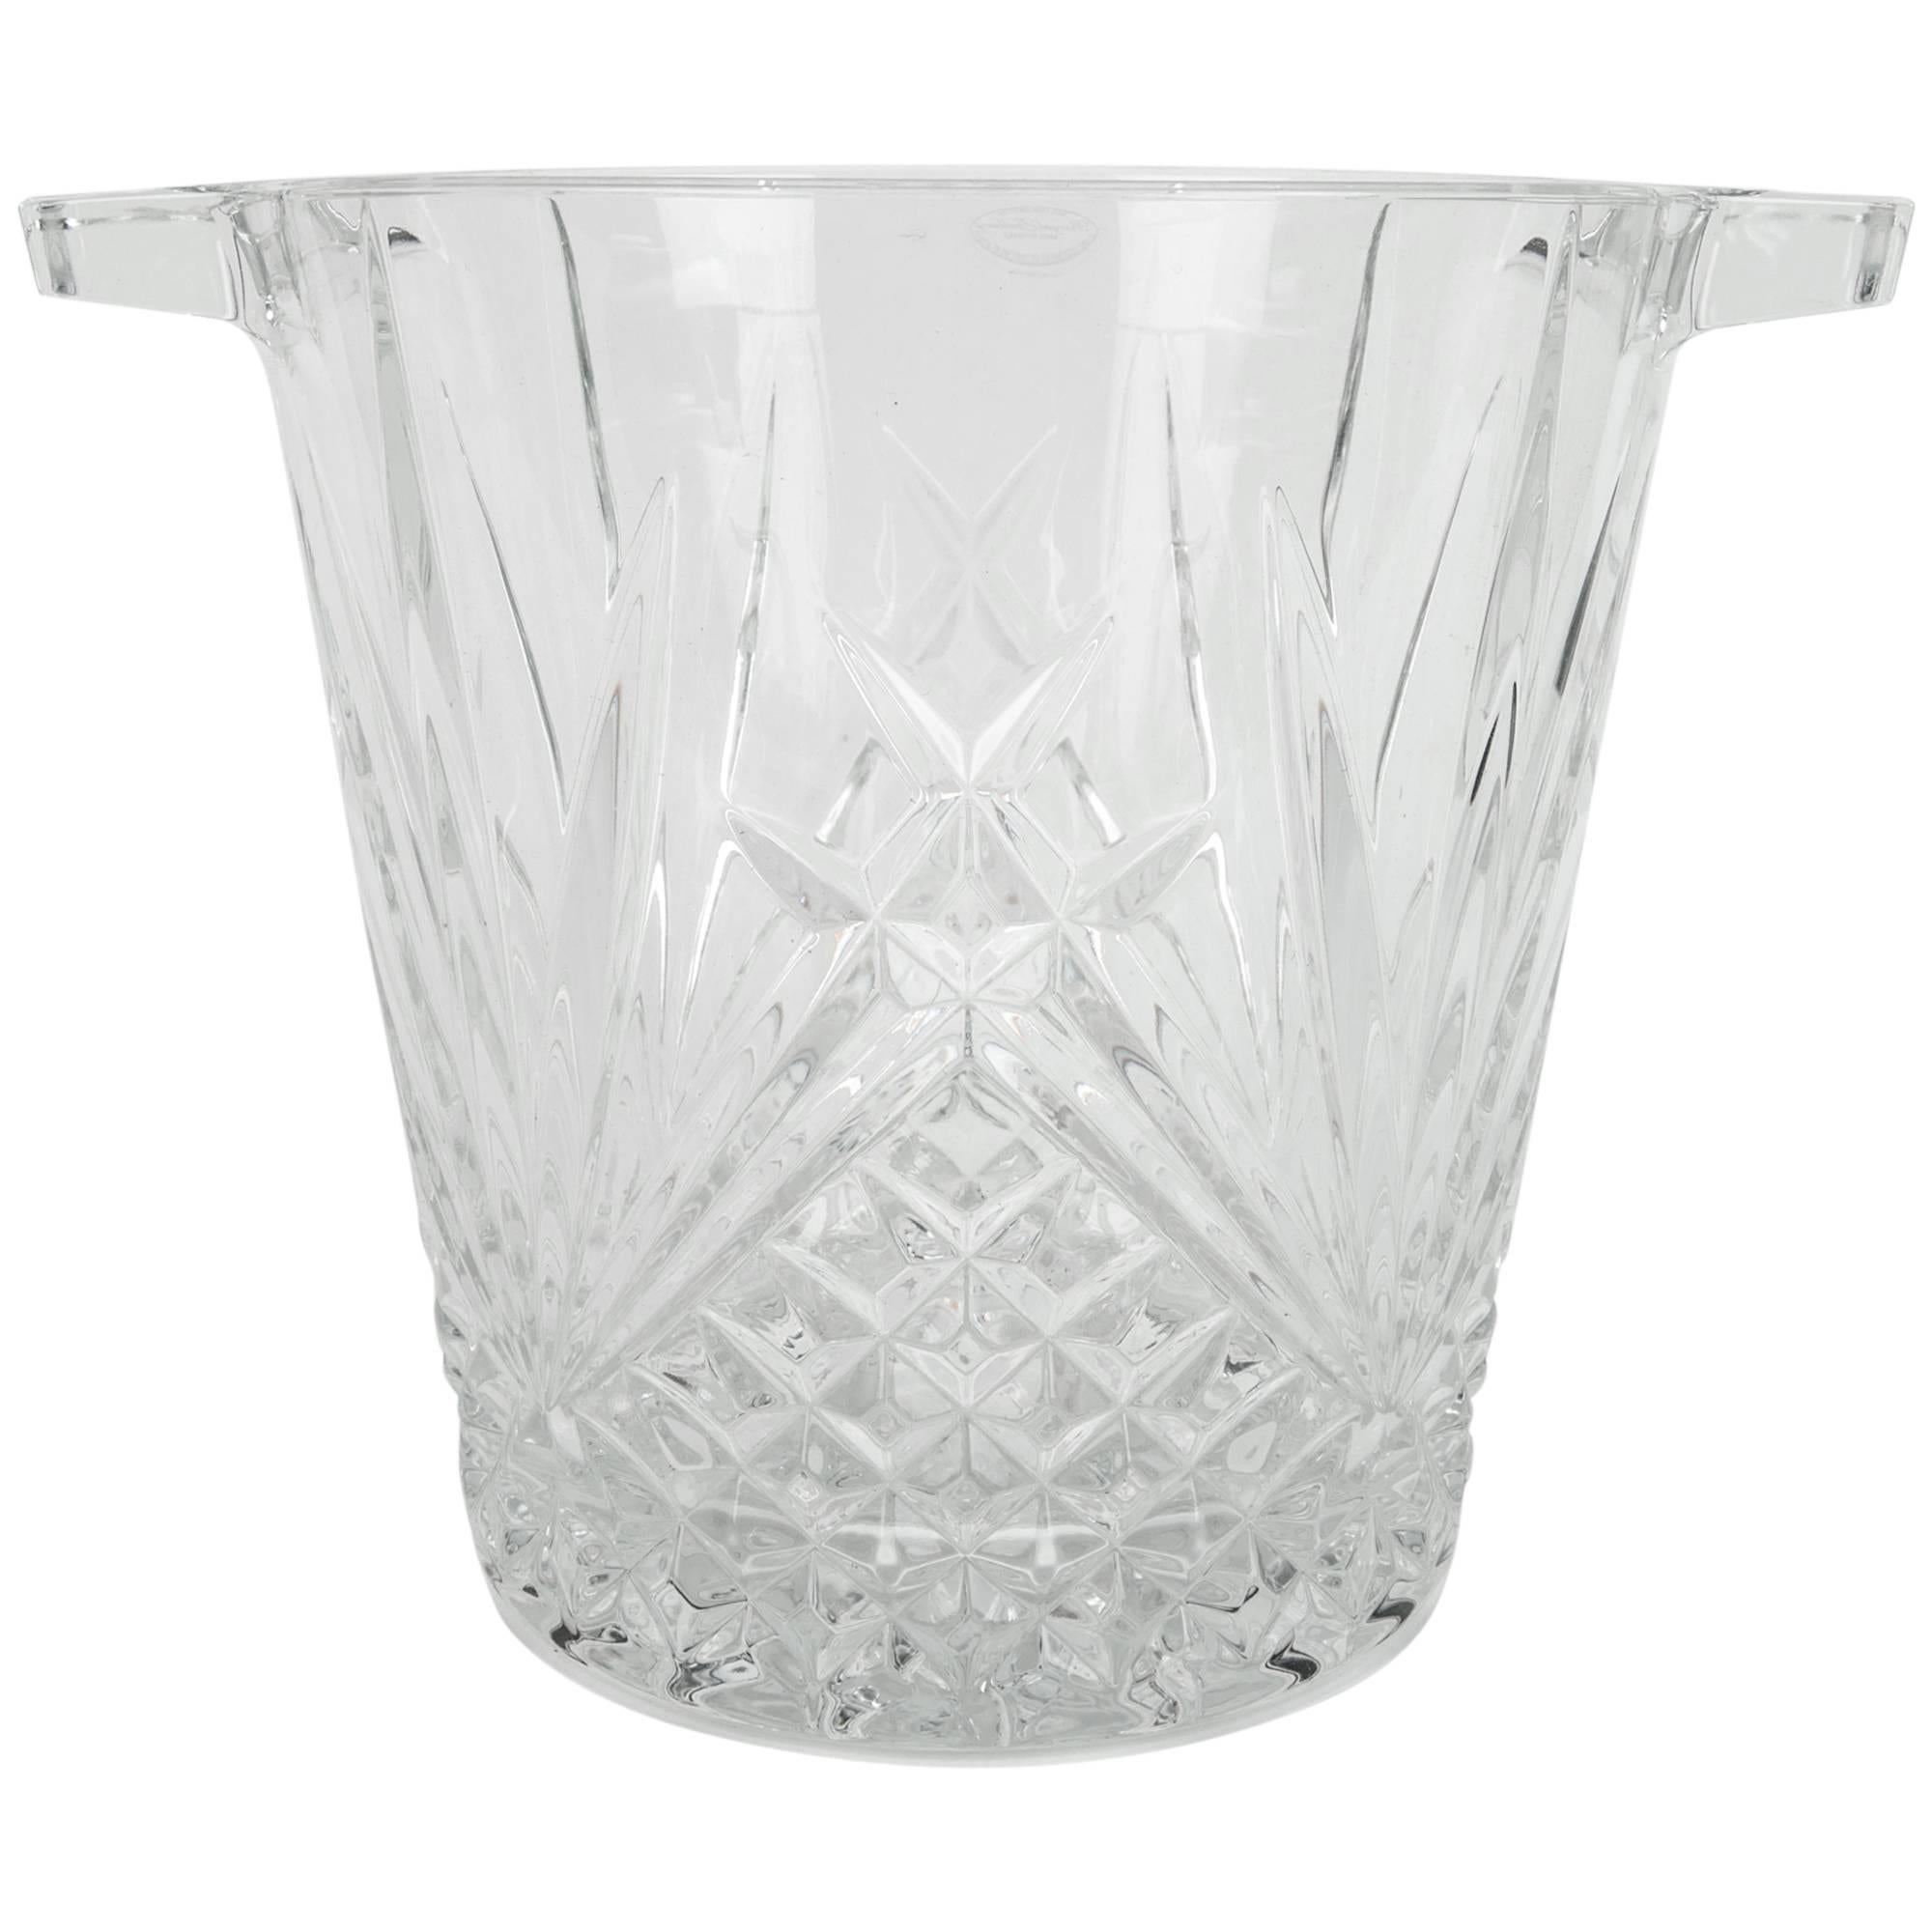 Vintage European Cut Crystal Cooler / Ice Bucket